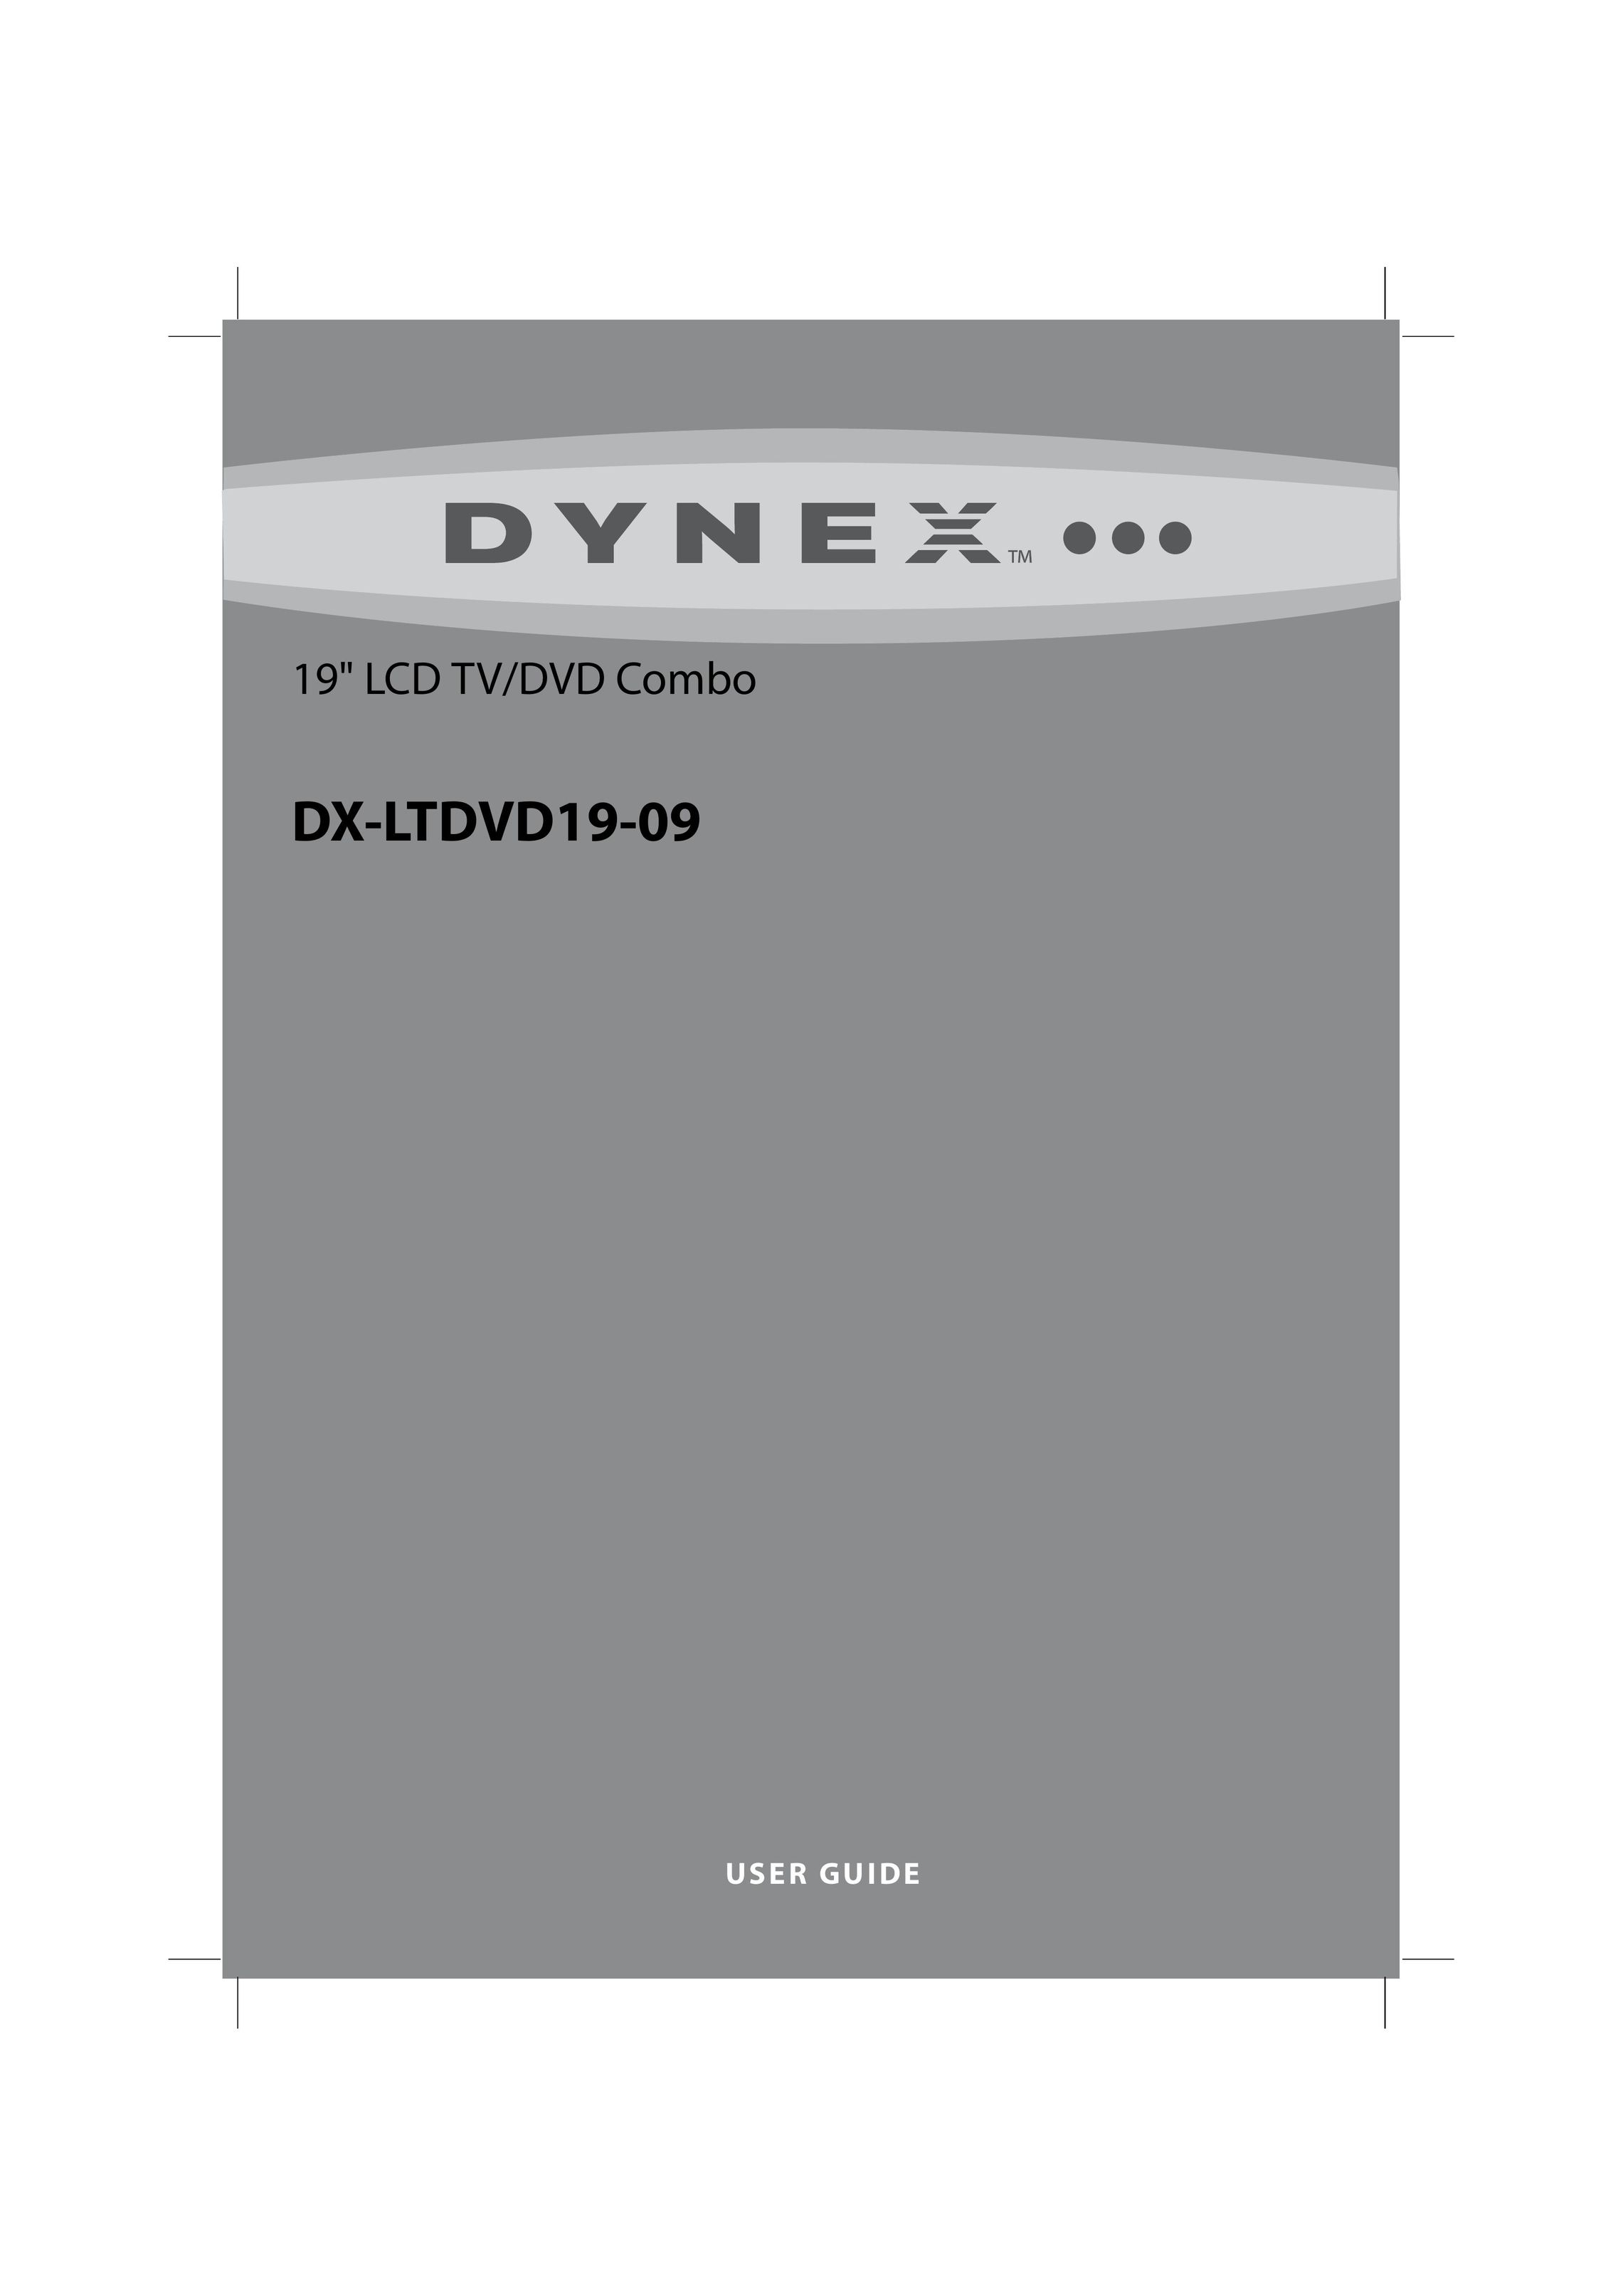 Dynex DX-LTDVD19-09 TV DVD Combo User Manual (Page 1)